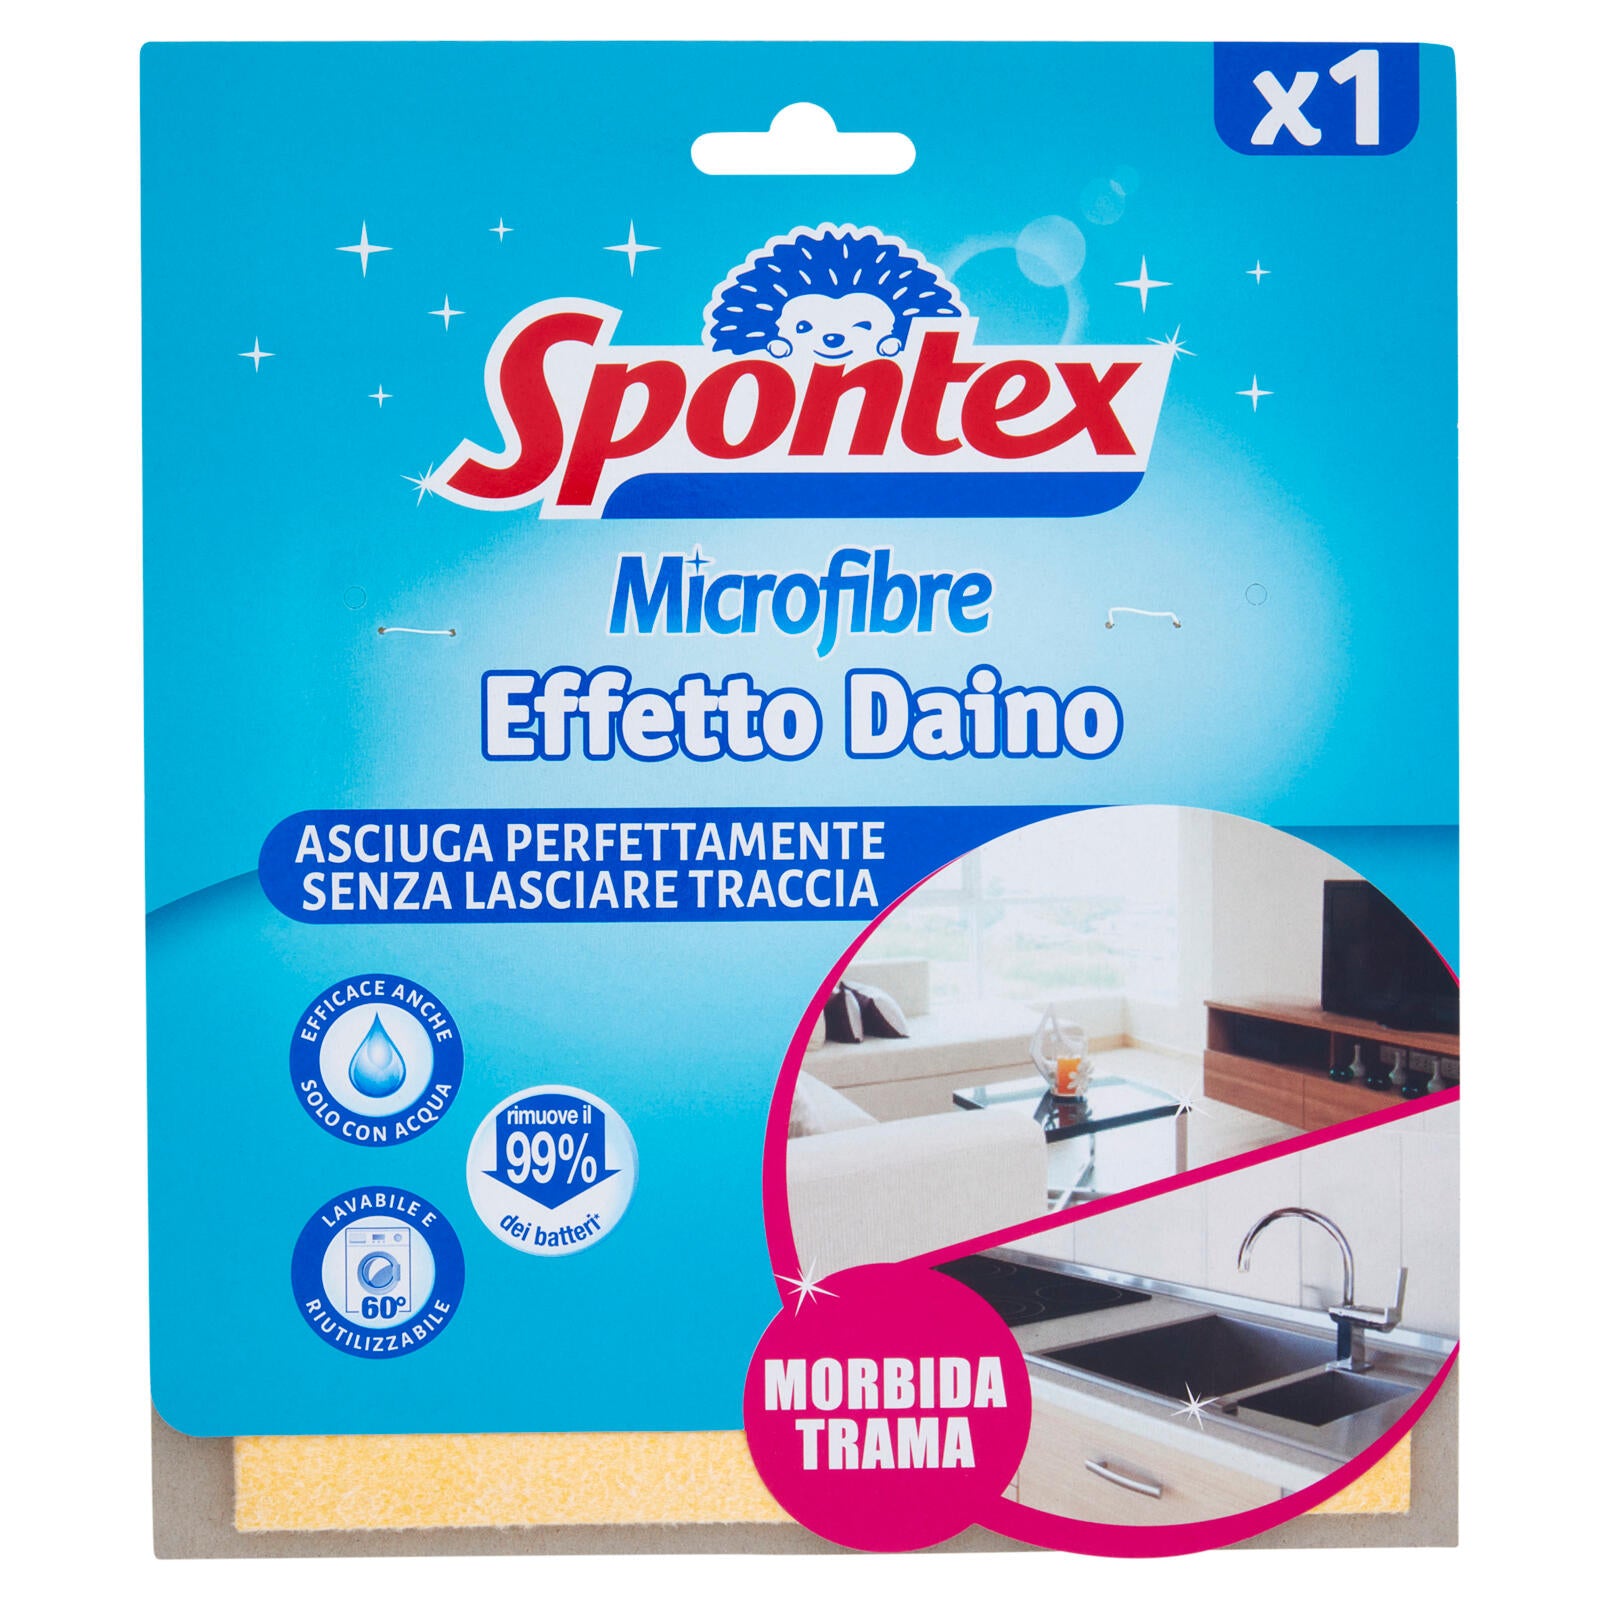 Spontex Microfibre Effetto Daino